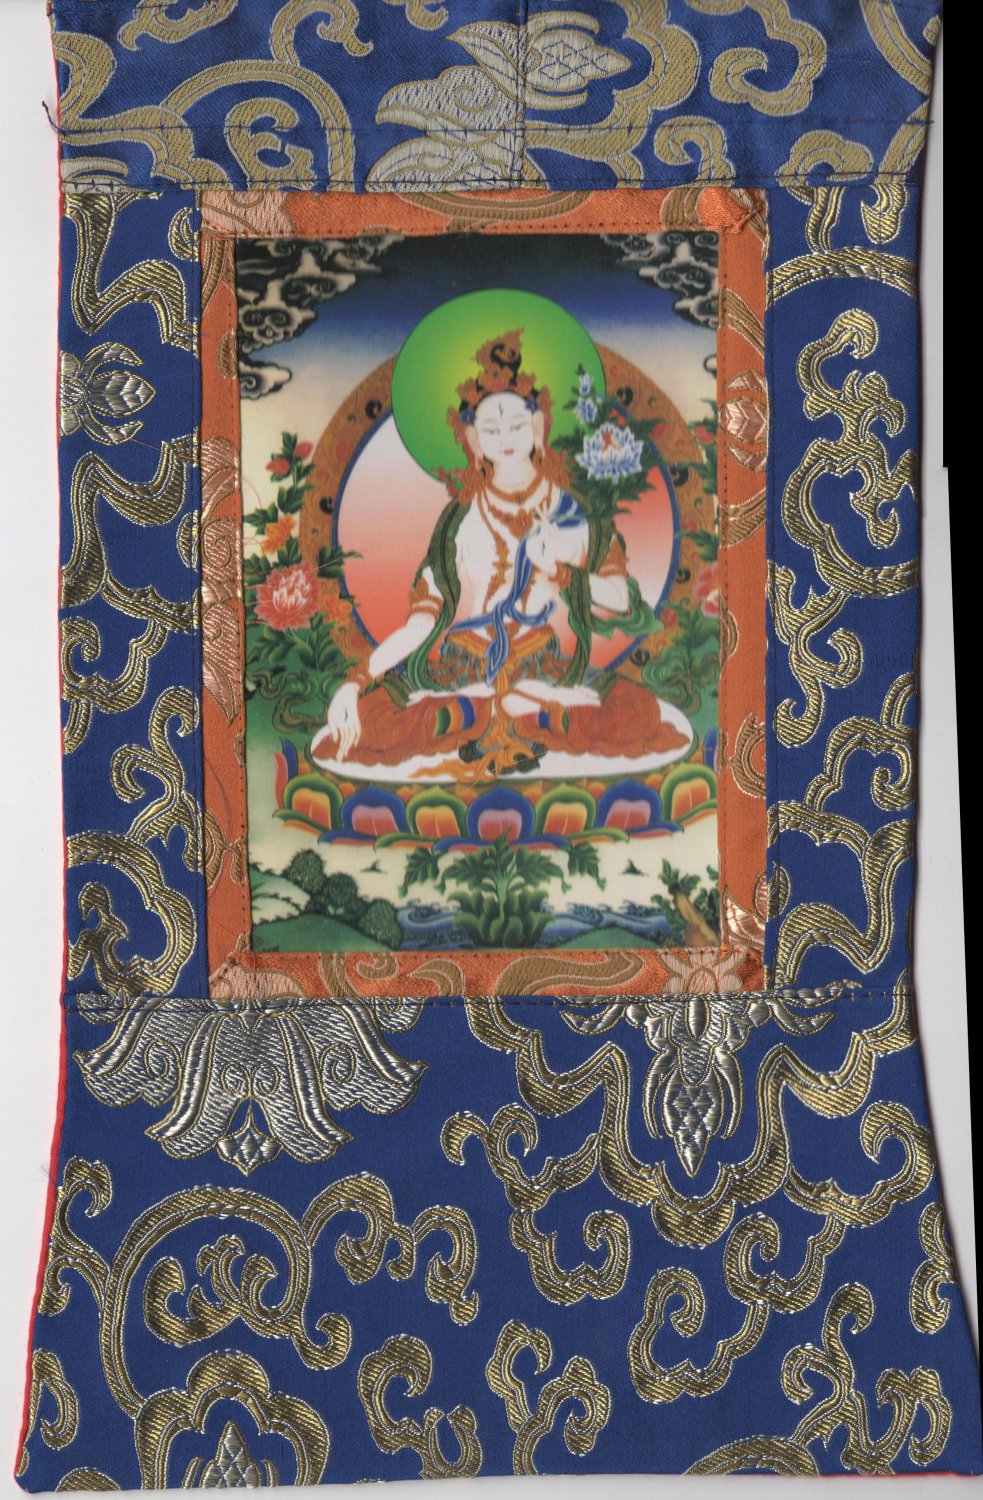 White Tara Buddha Thangka Print Buddhist Meditation Cloth Scroll Decor Picture